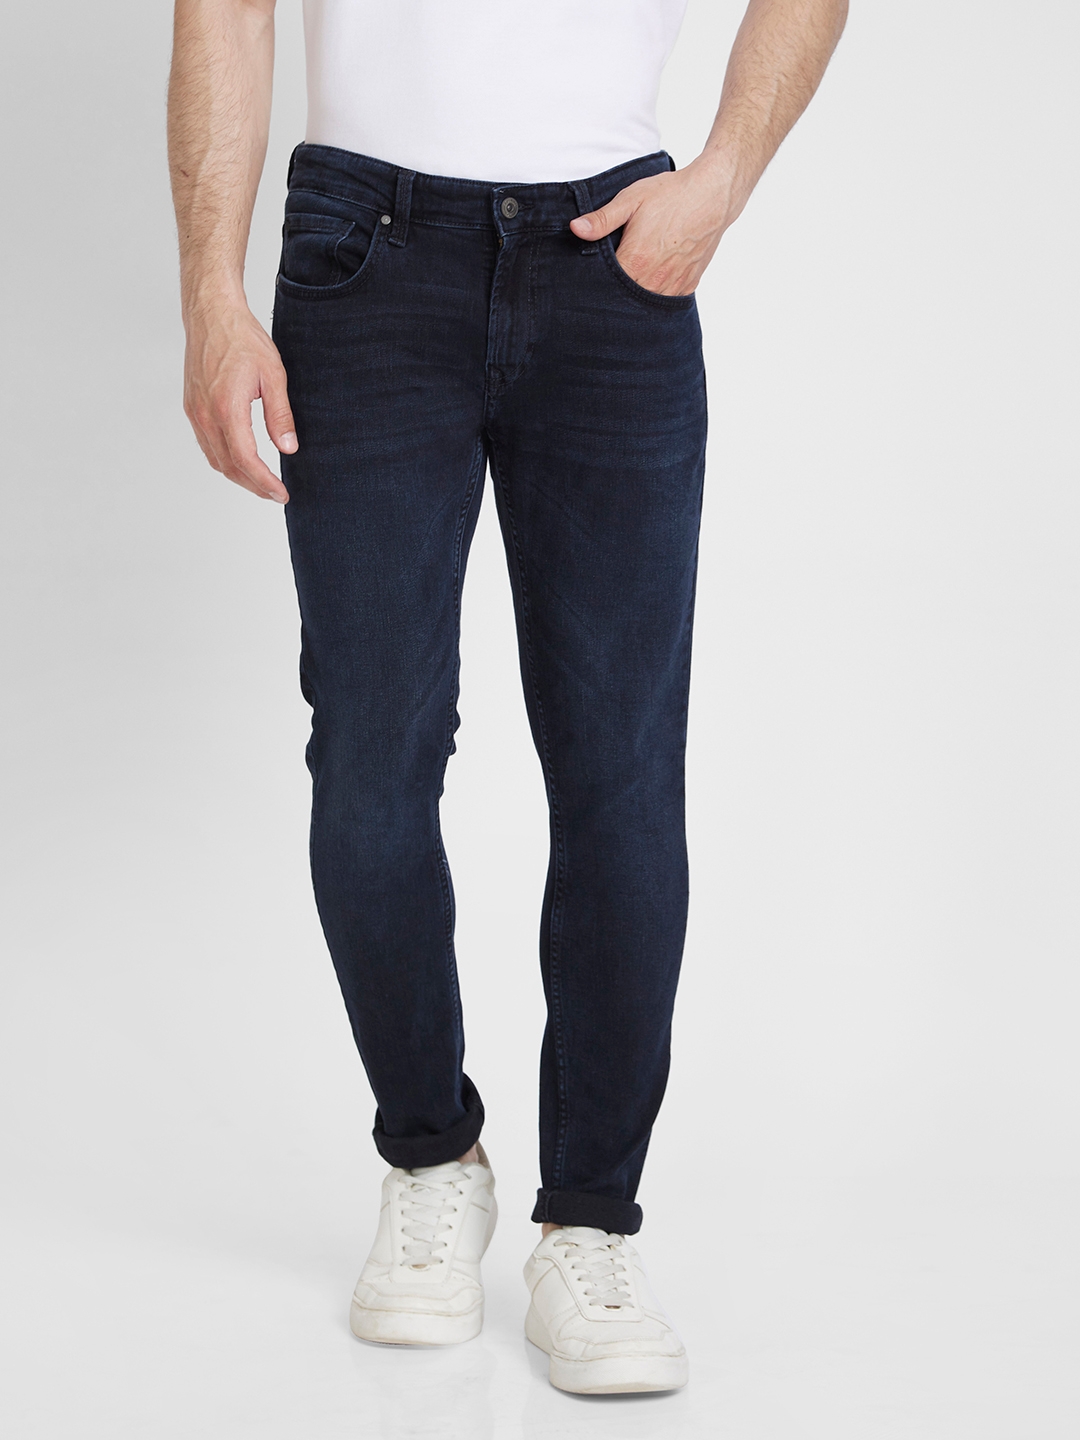 spykar | Spykar Men Charcoal Black Cotton Stretch Super Slim Fit Tapered Length Clean Look Low Rise Jeans - (Super Skinny)